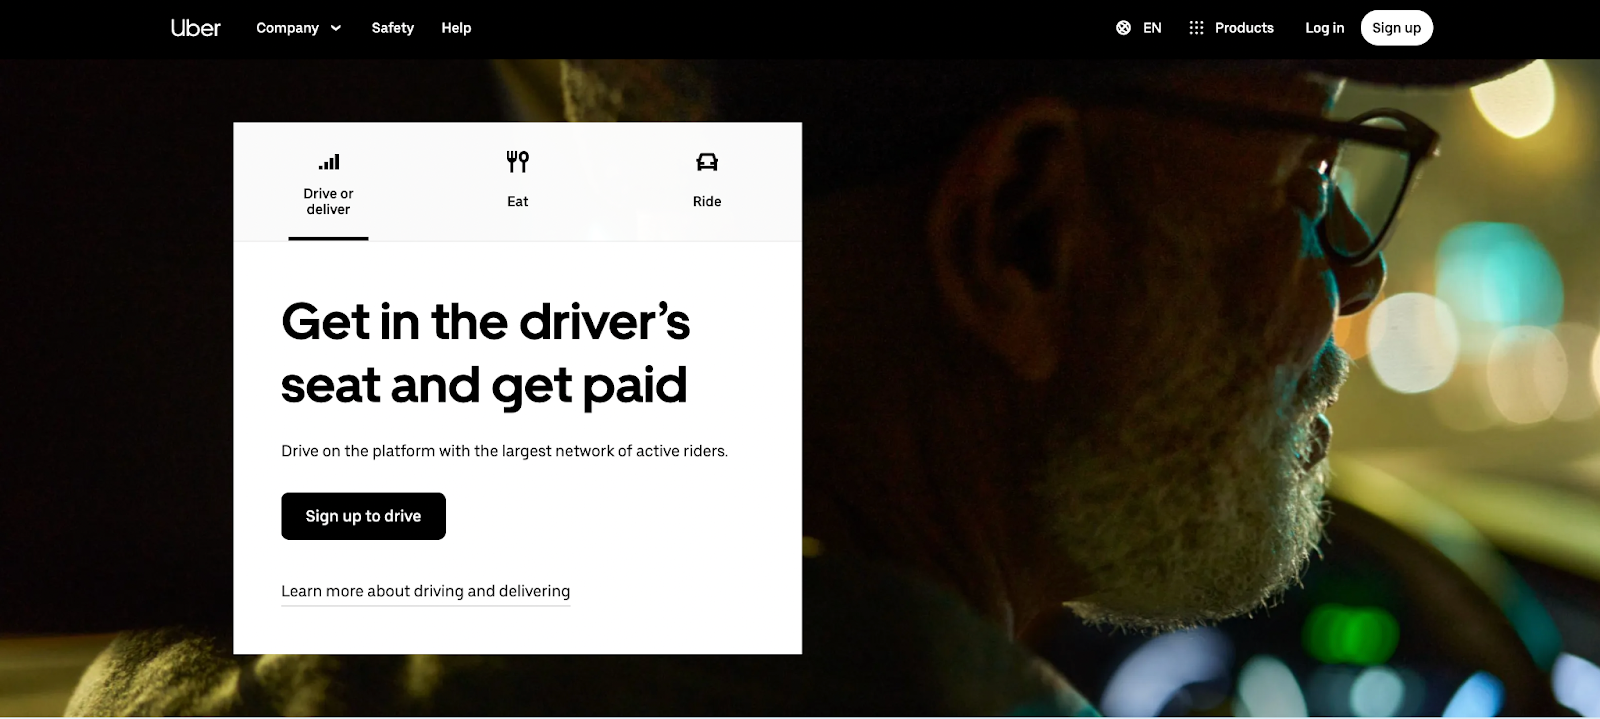 Uber home page